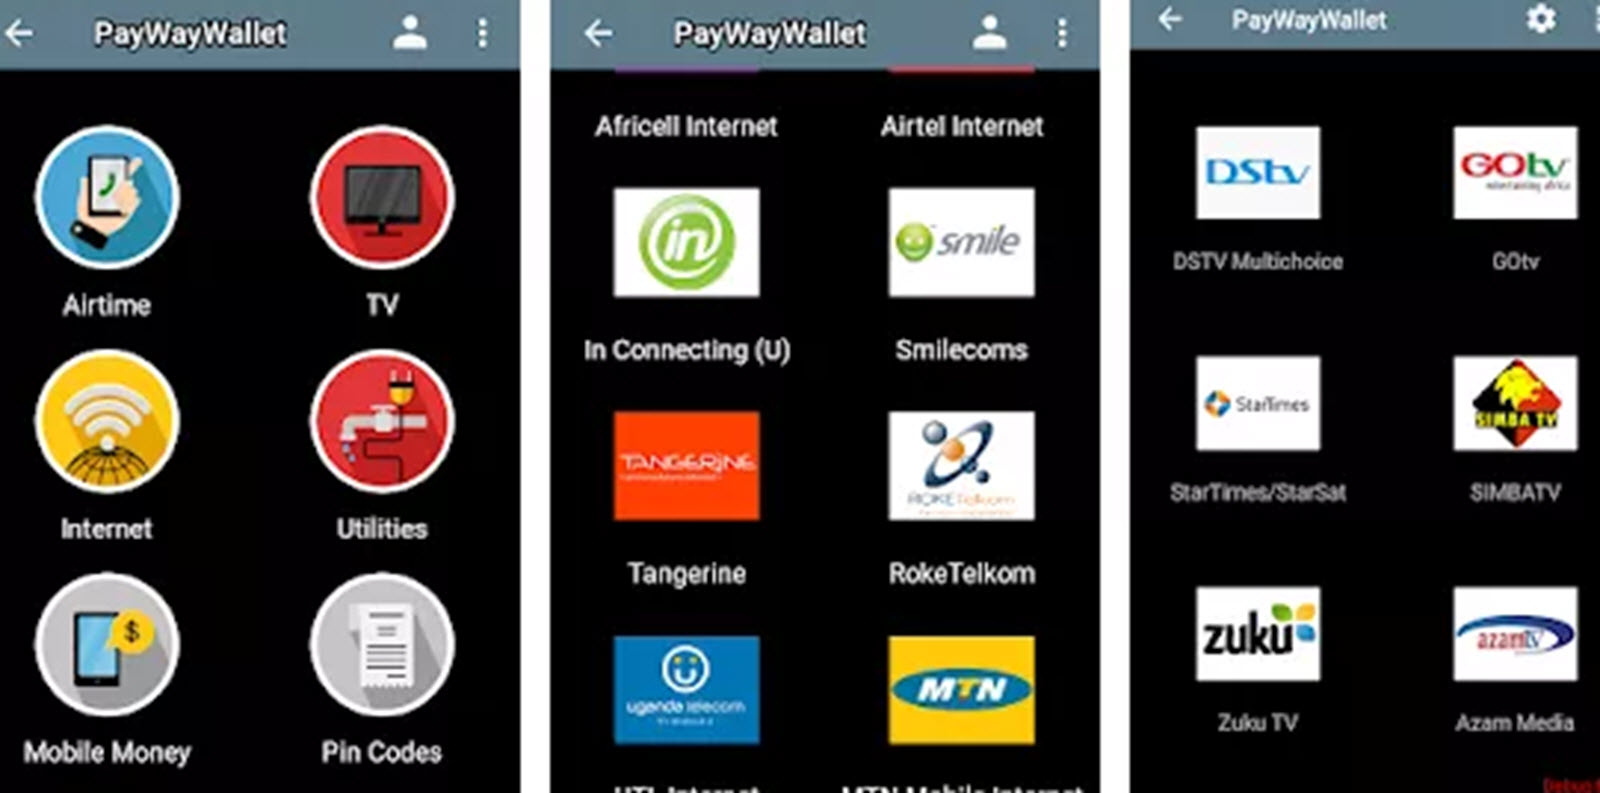 payway wallet app